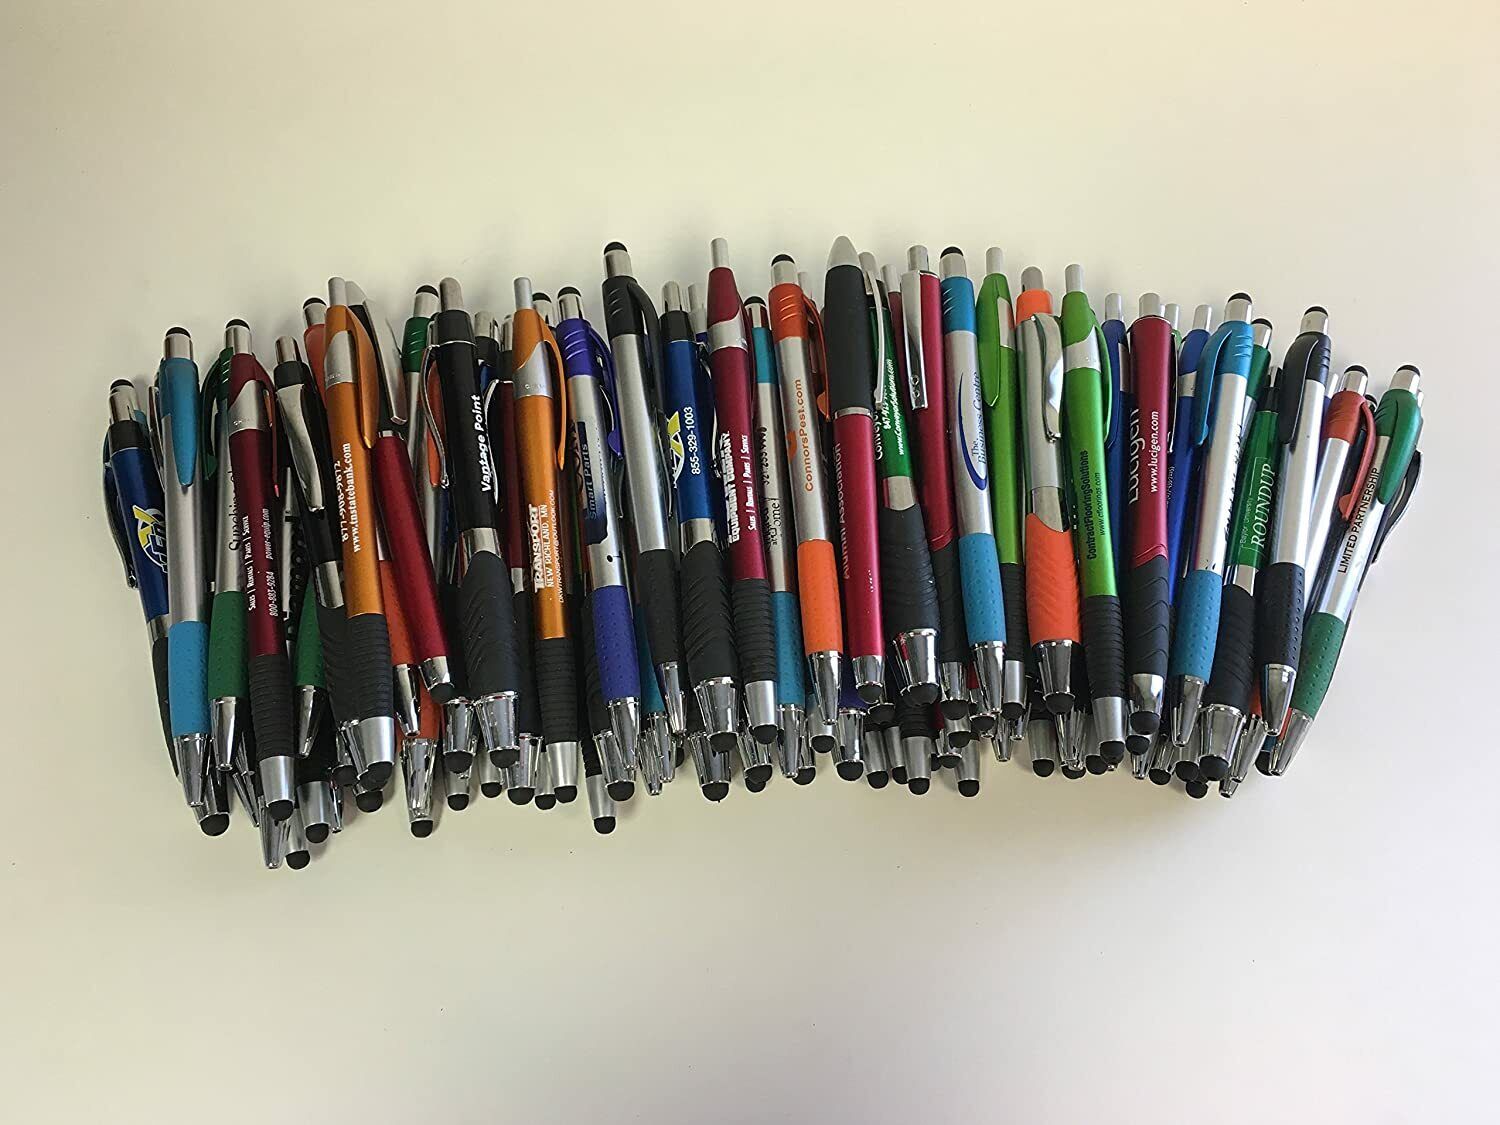 Bulk Lot of 100 Pens - Misprint Plastic Retractable Ball Point Pens with Stylus